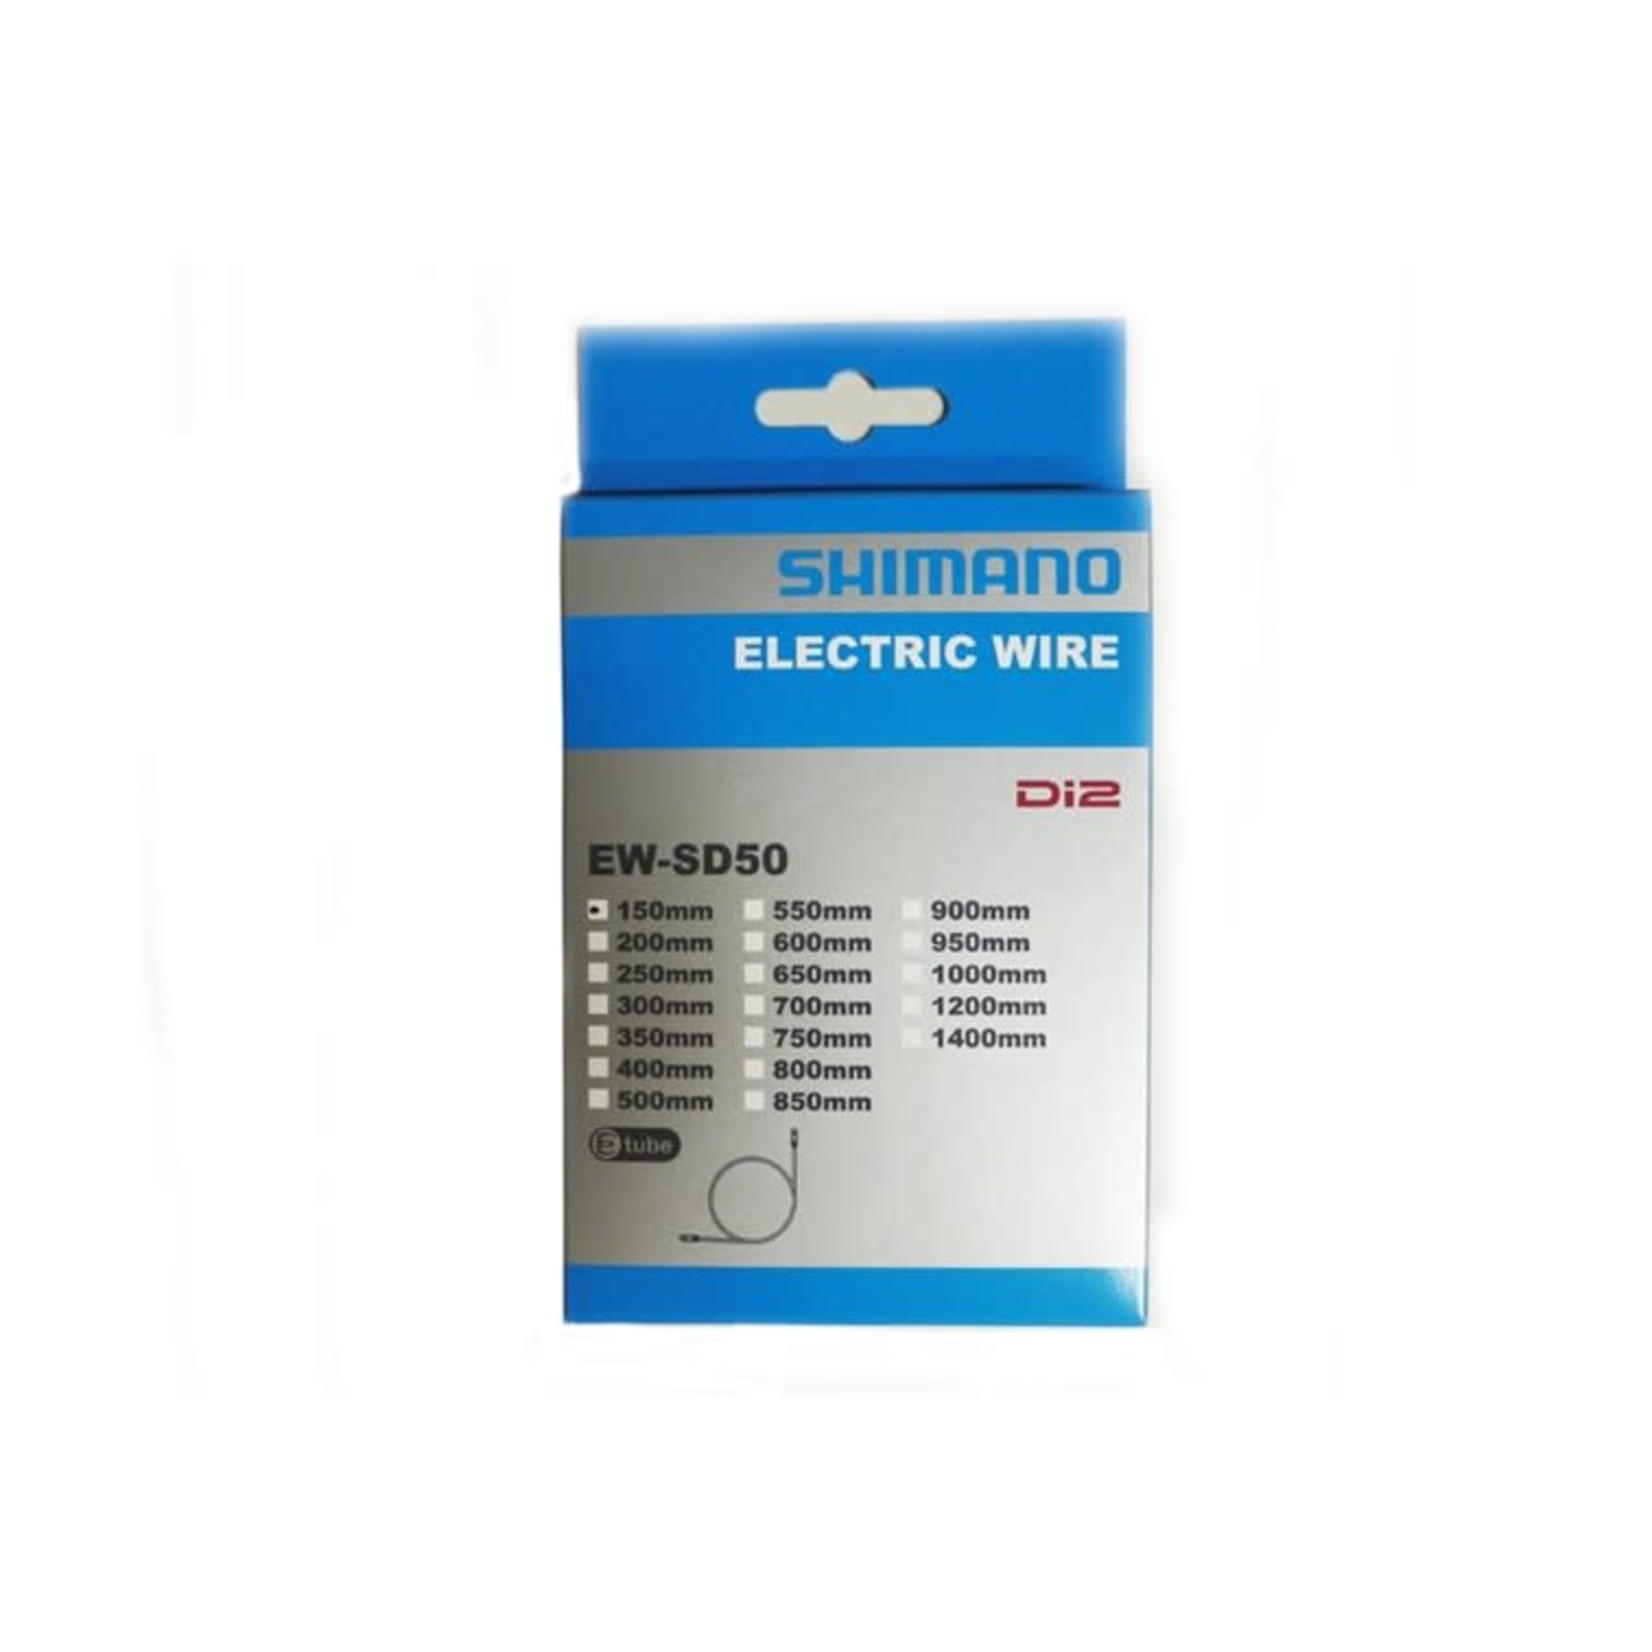 Shimano Shimano EW-SD50 DI2 Electric Wire 150mm